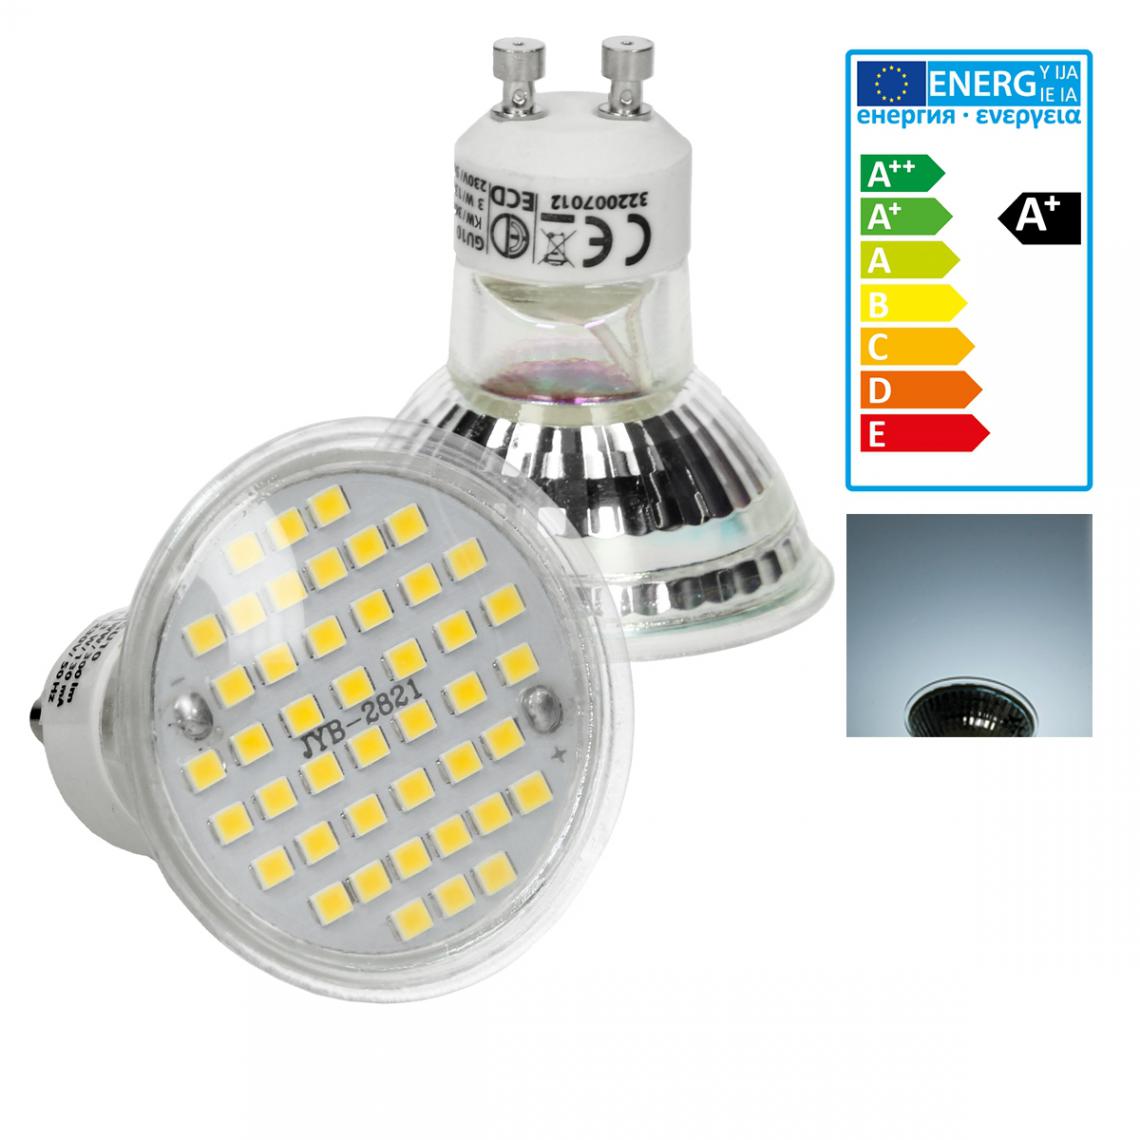 Ecd Germany - ECD Germany 5 x LED GU10 44SMD Spot 3W - Lampe à LED 20W - en verre - 251 lumens - Blanc froid 6000K - Spot à encastrer - Ampoules LED